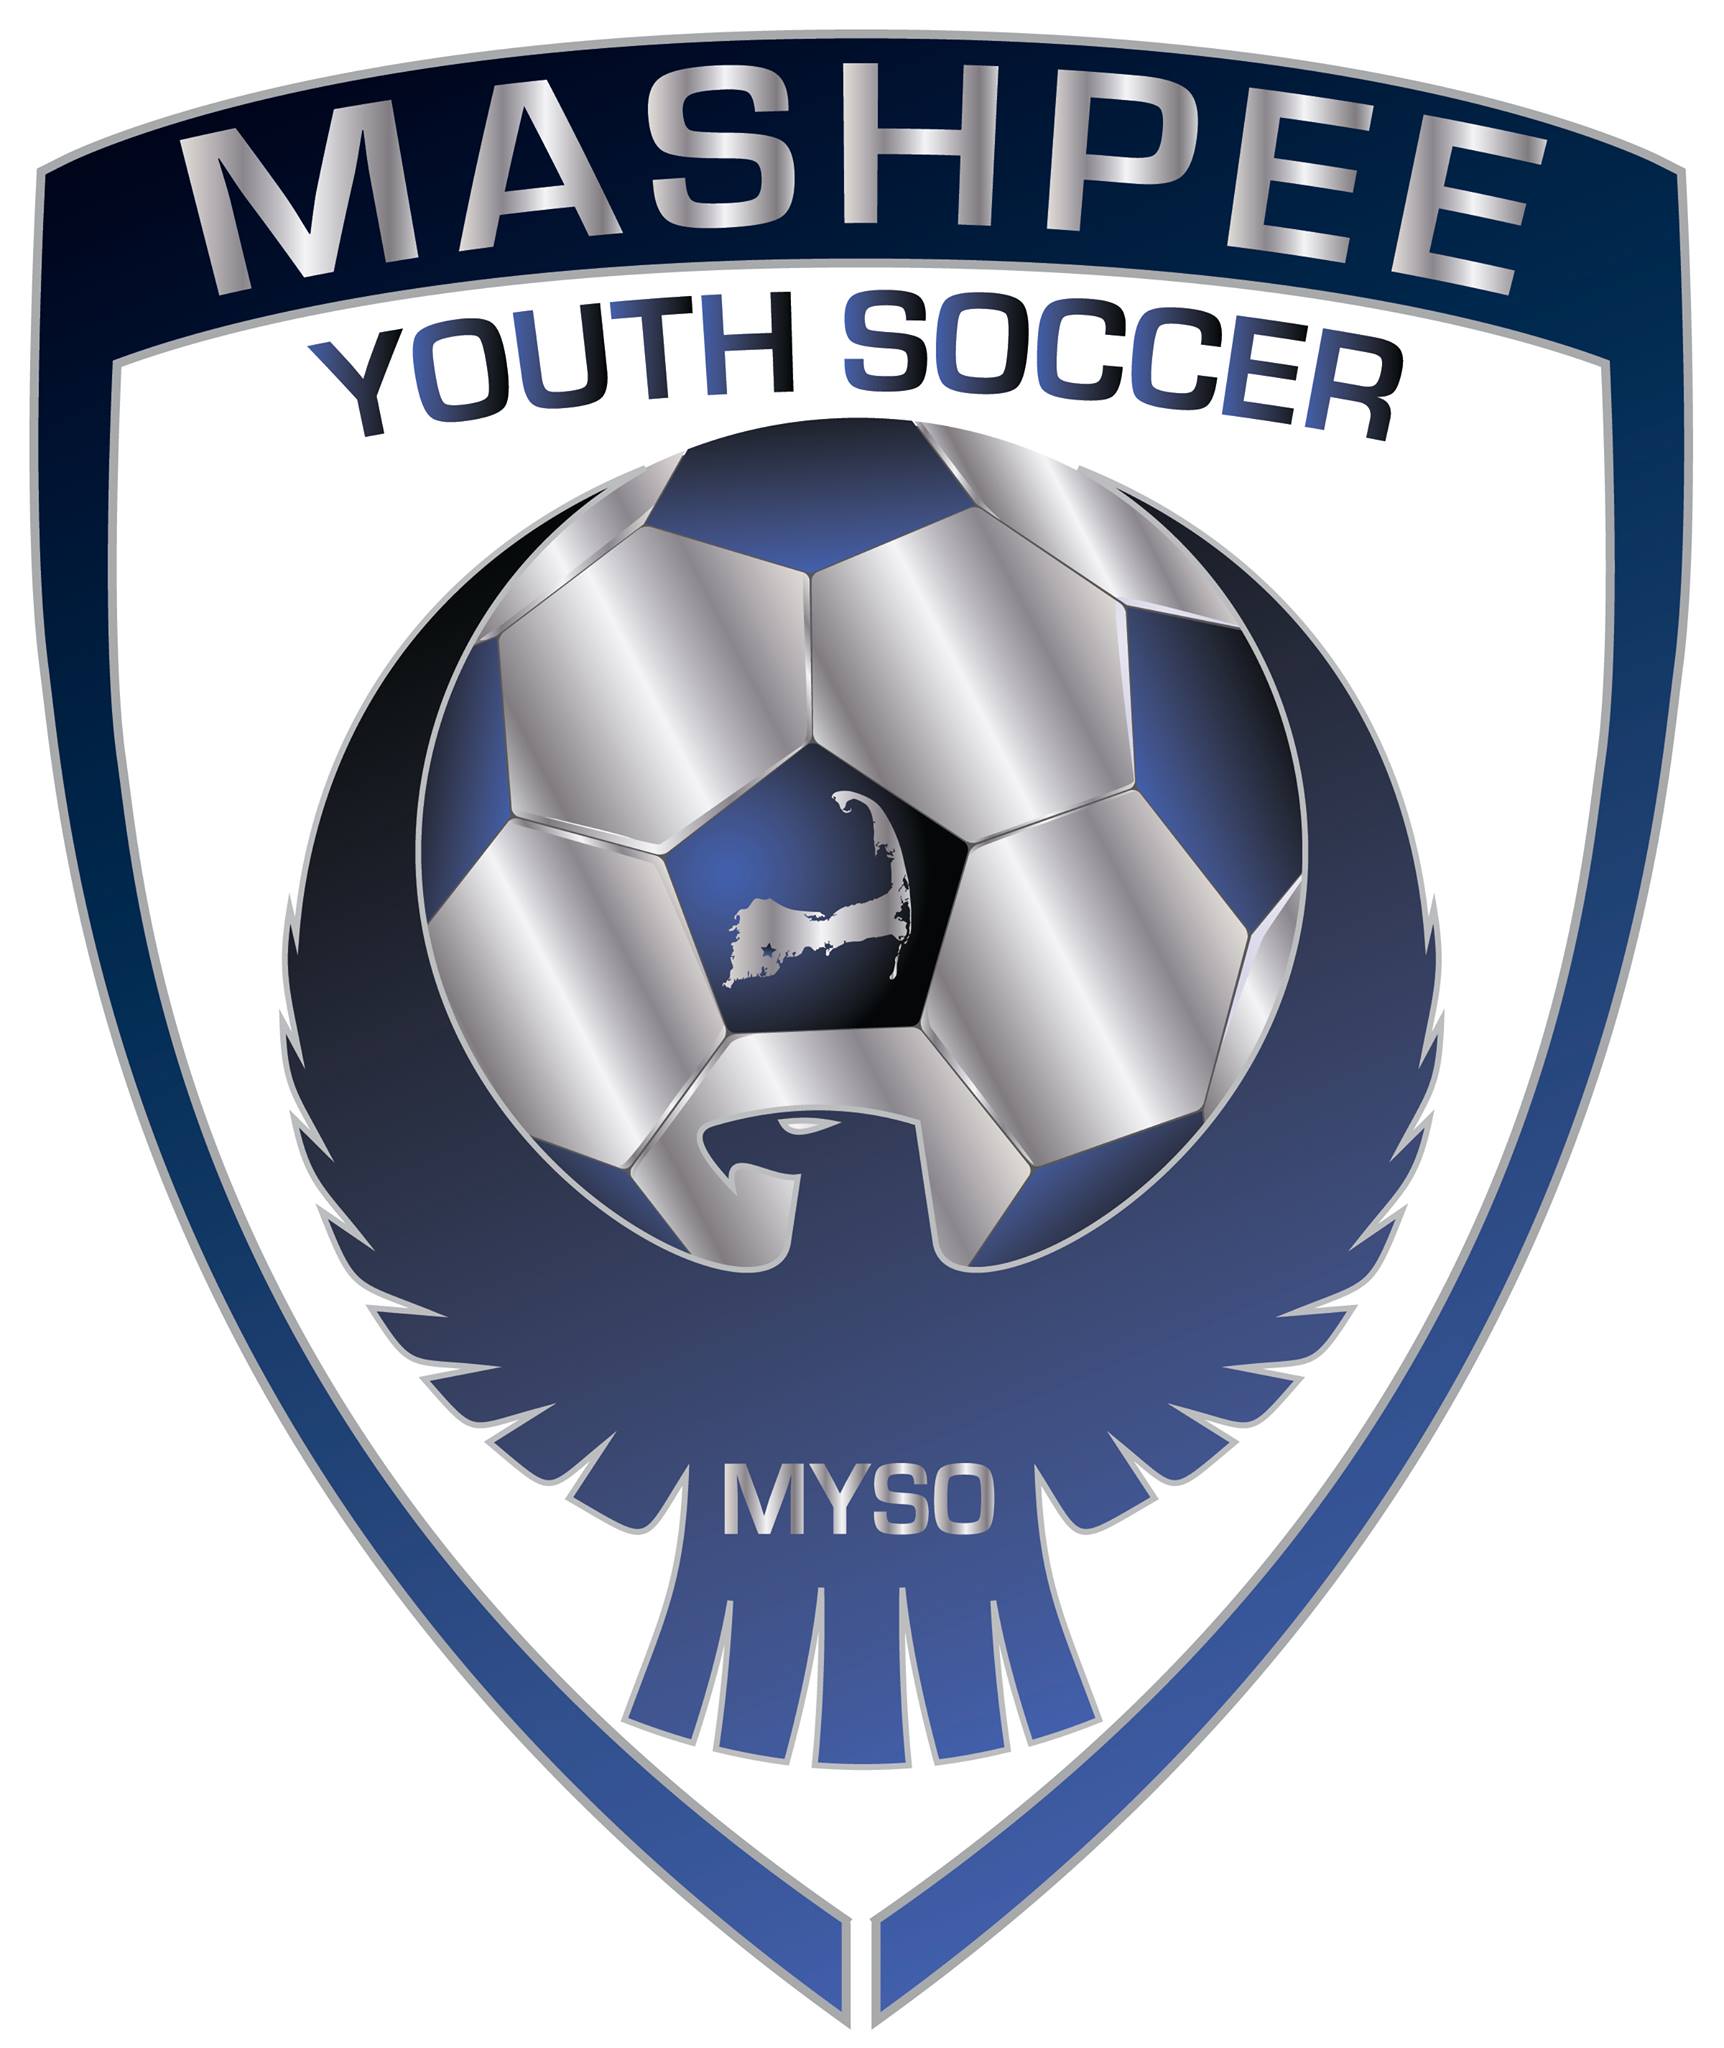 Mashpee Youth Soccer Organization team badge